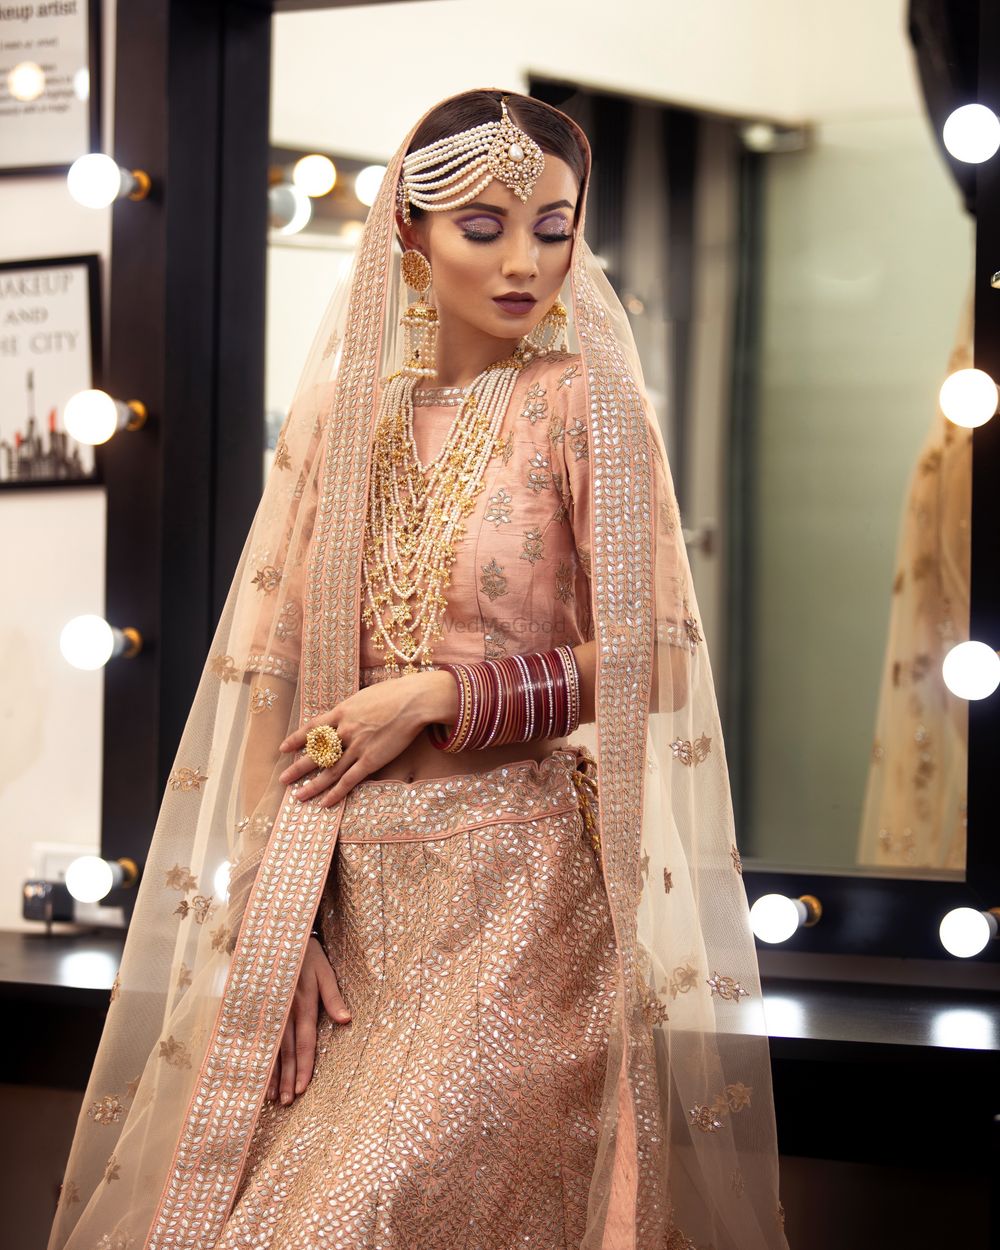 Photo From International Bride - By Nikita Gaur Makeovers